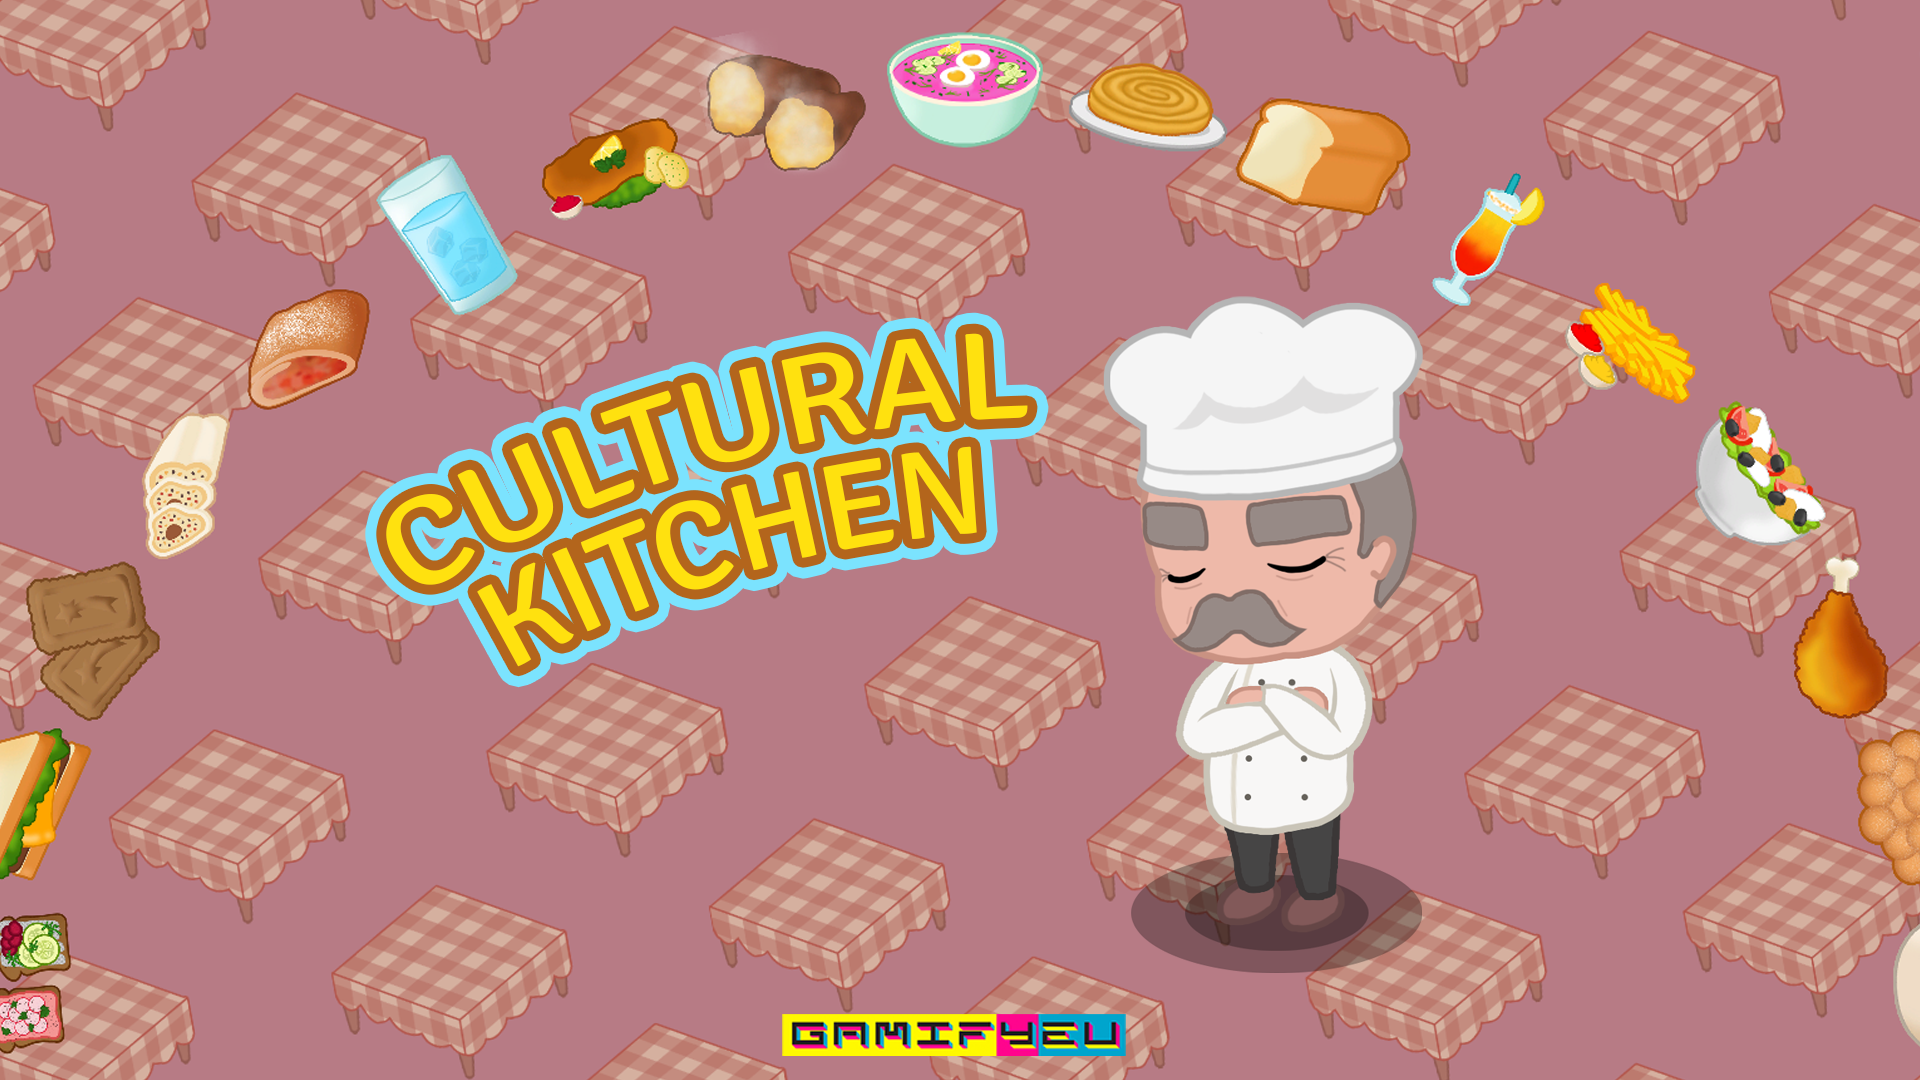 GamifyEU – Cultural Kitchen